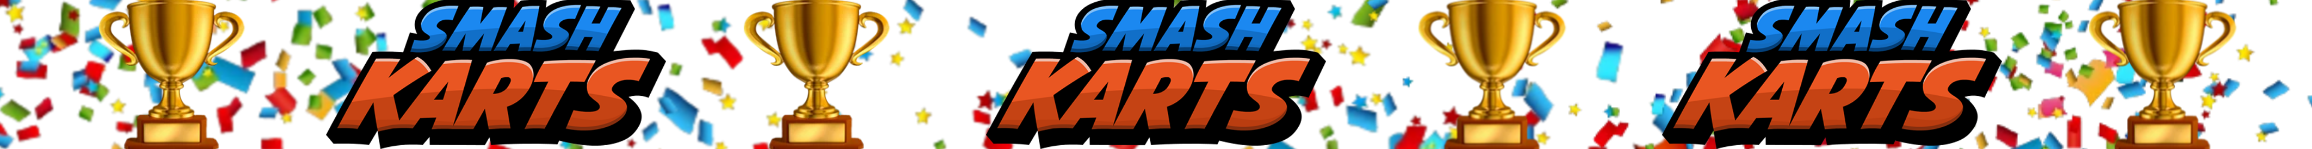 separador Smash Karts.png